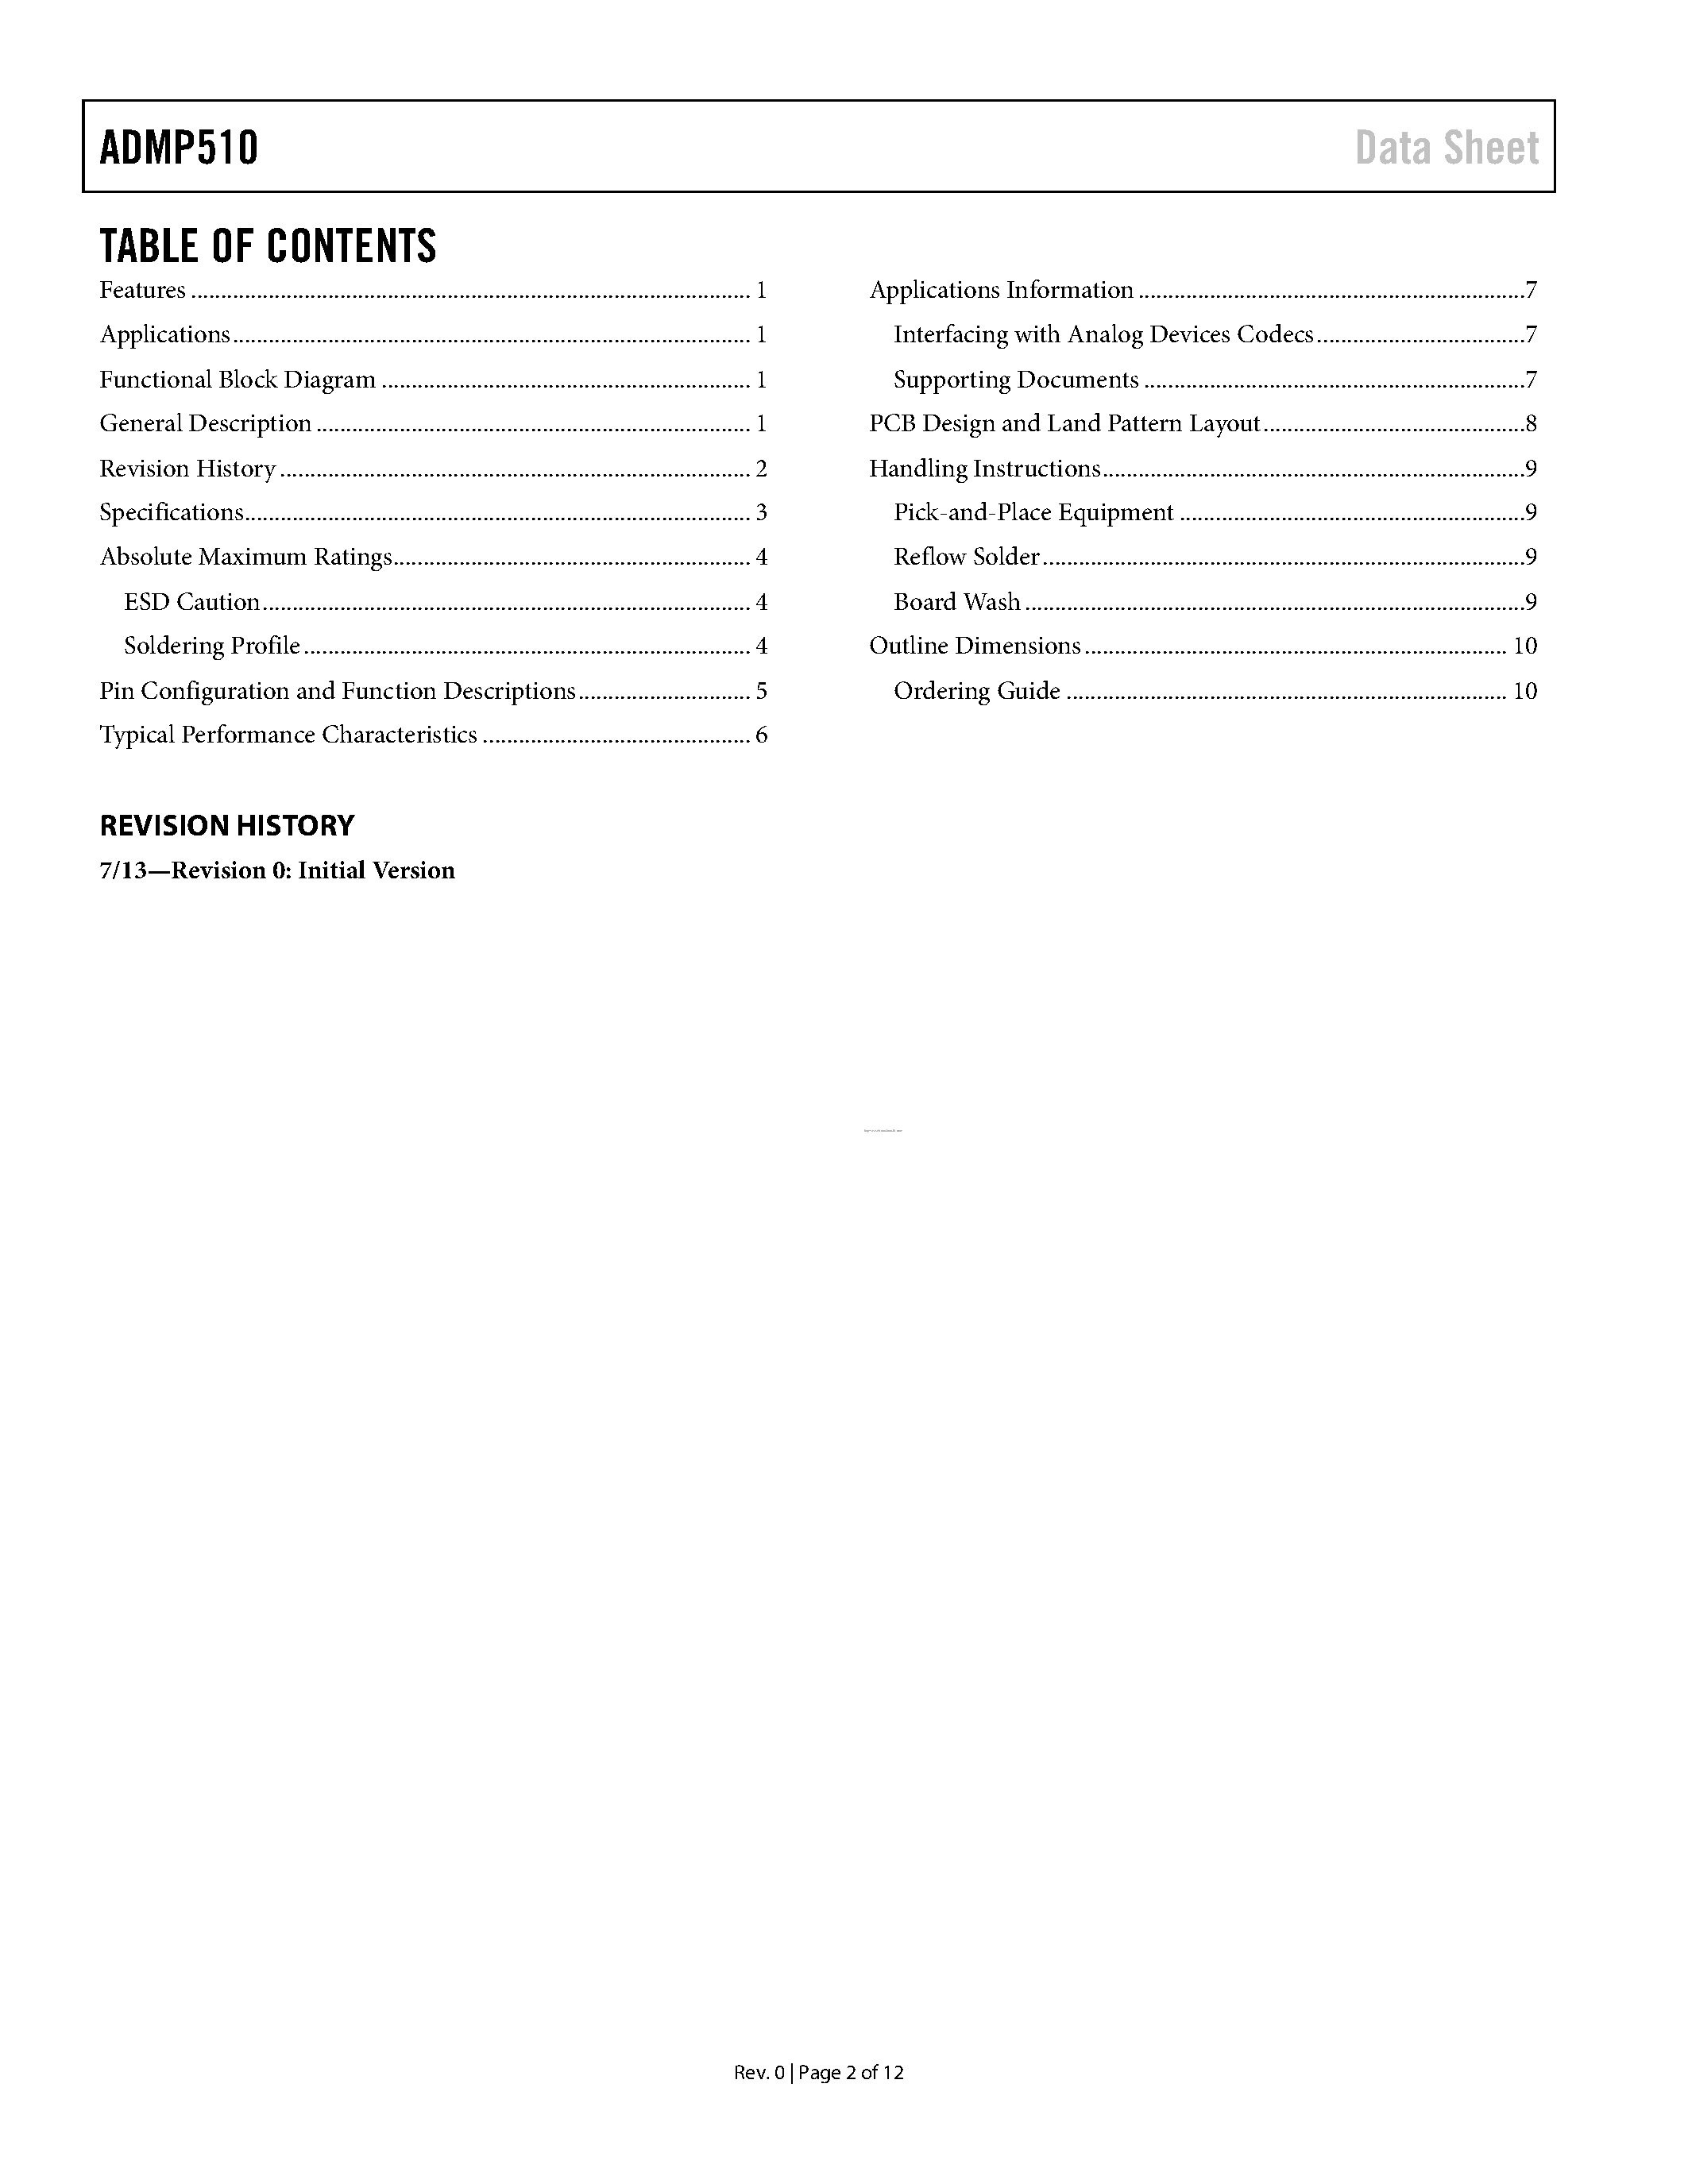 Datasheet ADMP510 - page 2